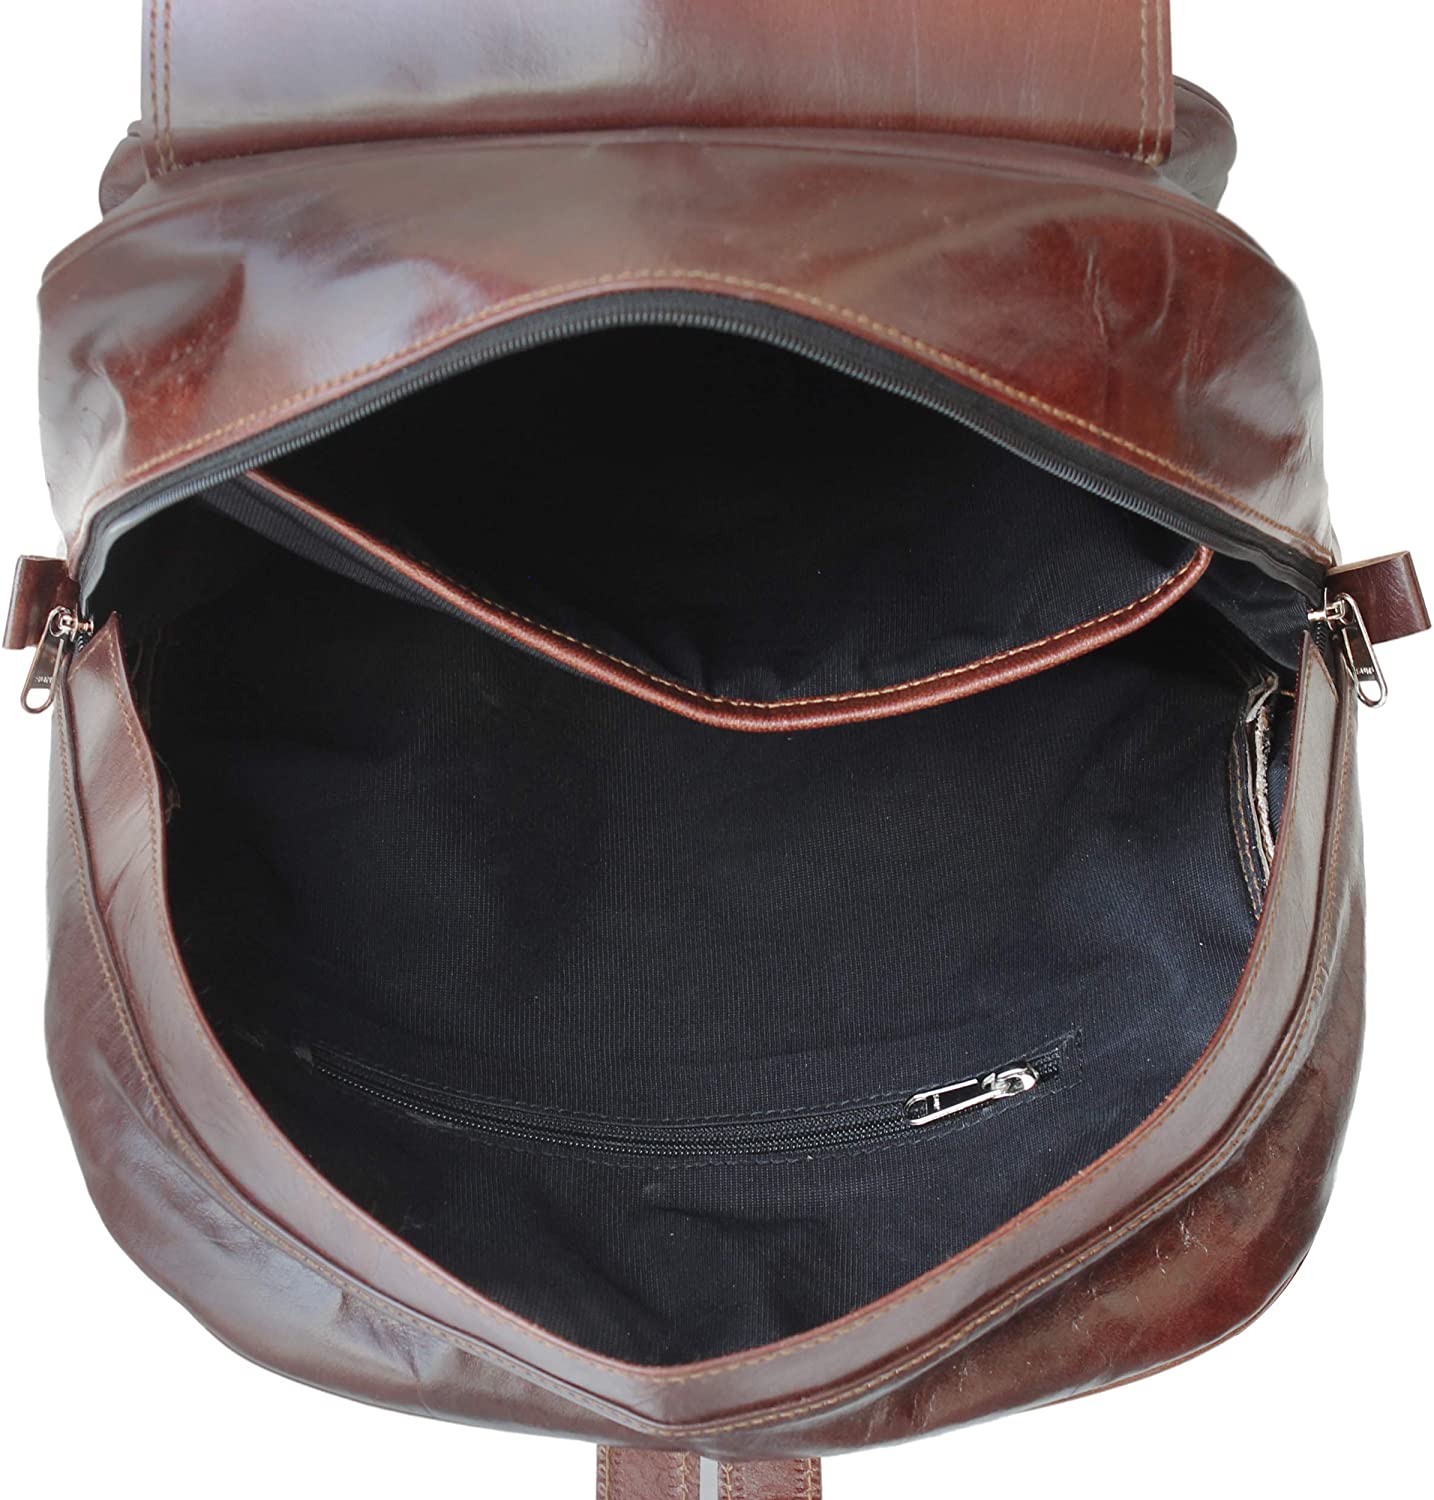 inside leather backpack